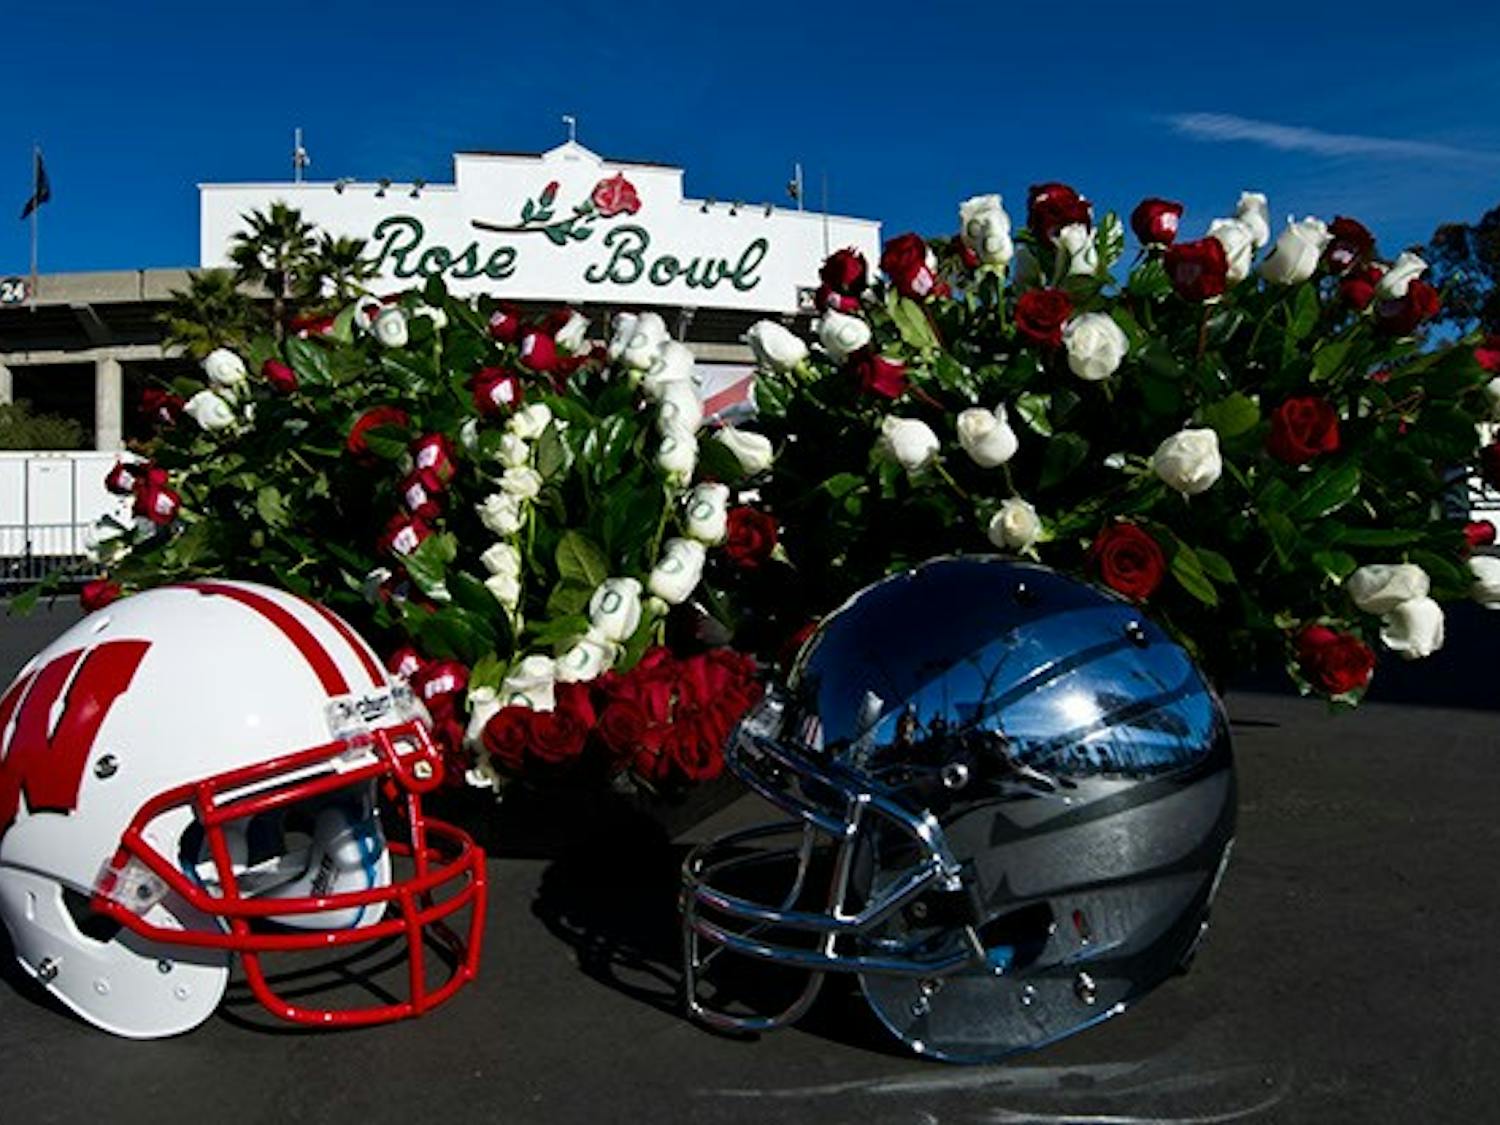 Photos: The Rose Bowl